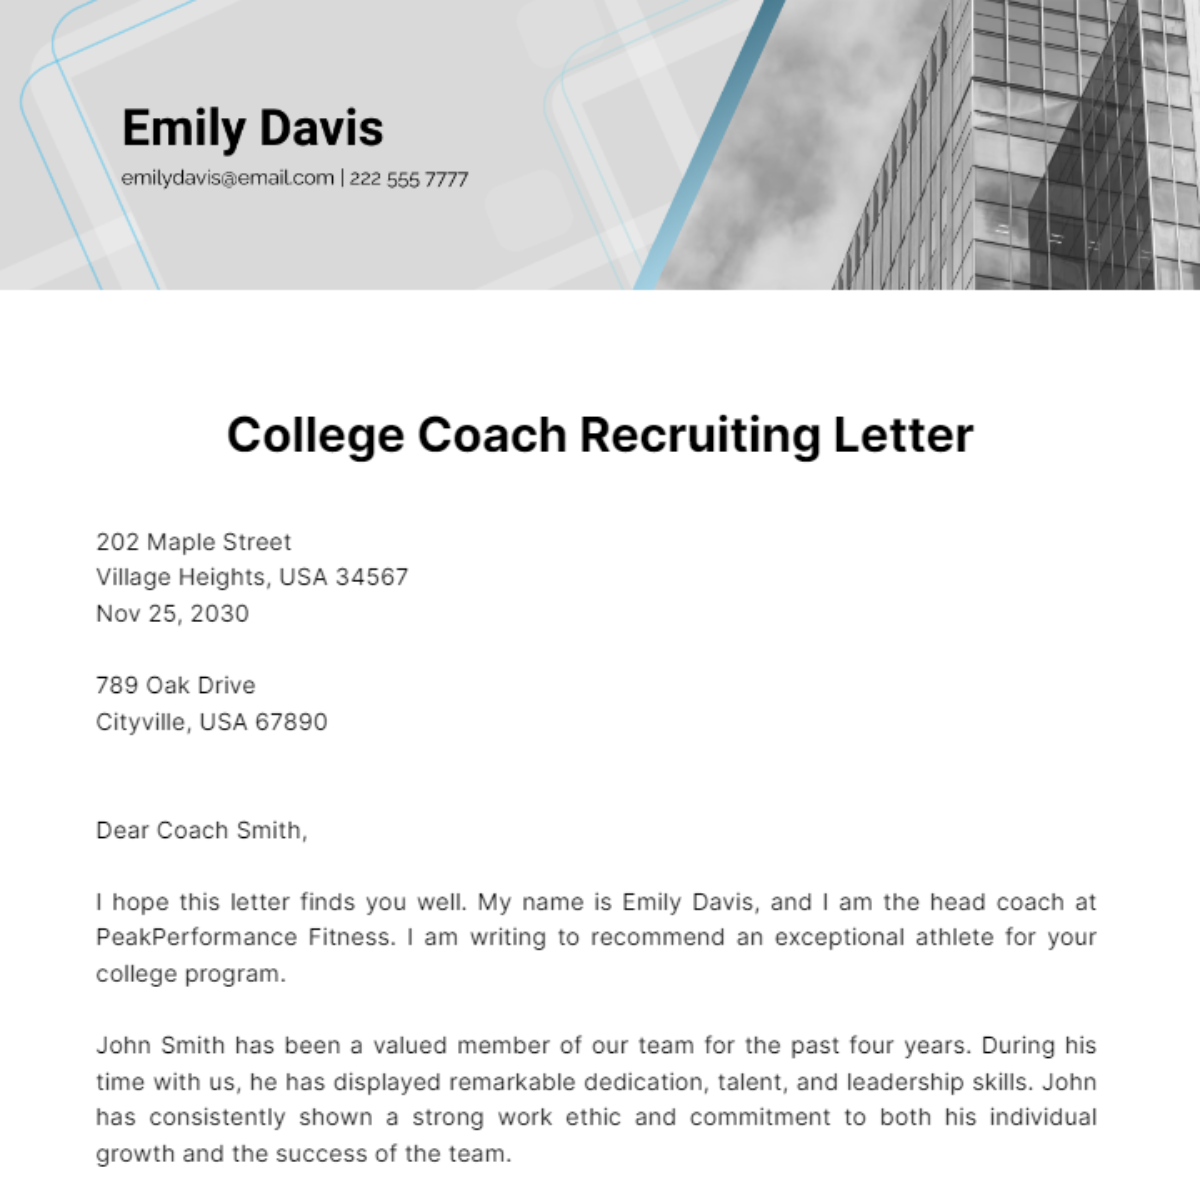 College Coach Recruiting Letter Template